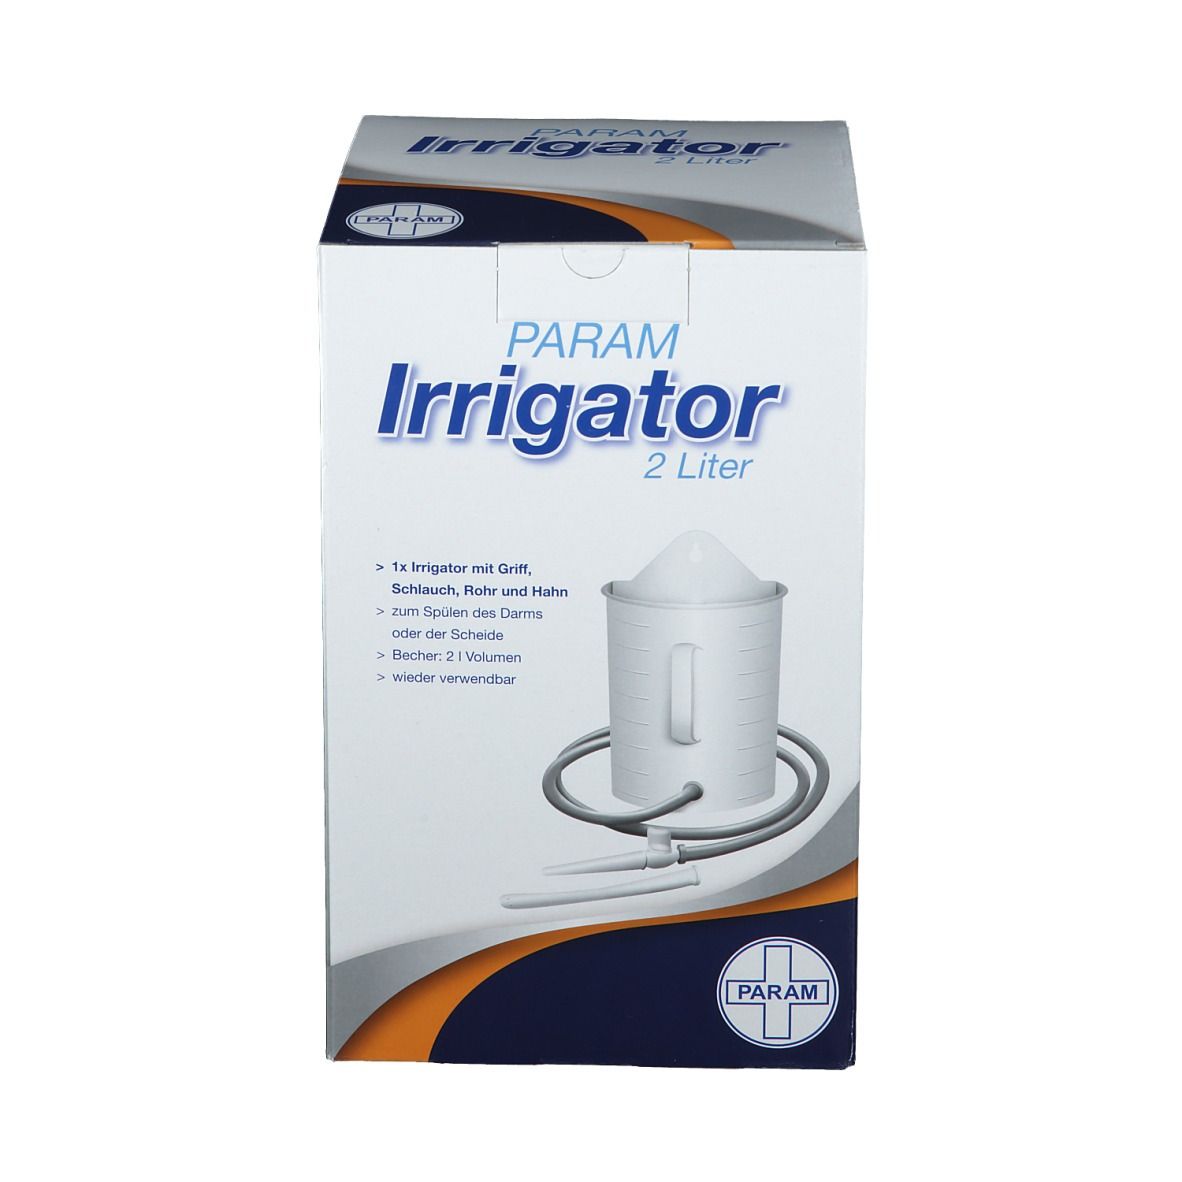 PARAM Irrigator 2 Liter